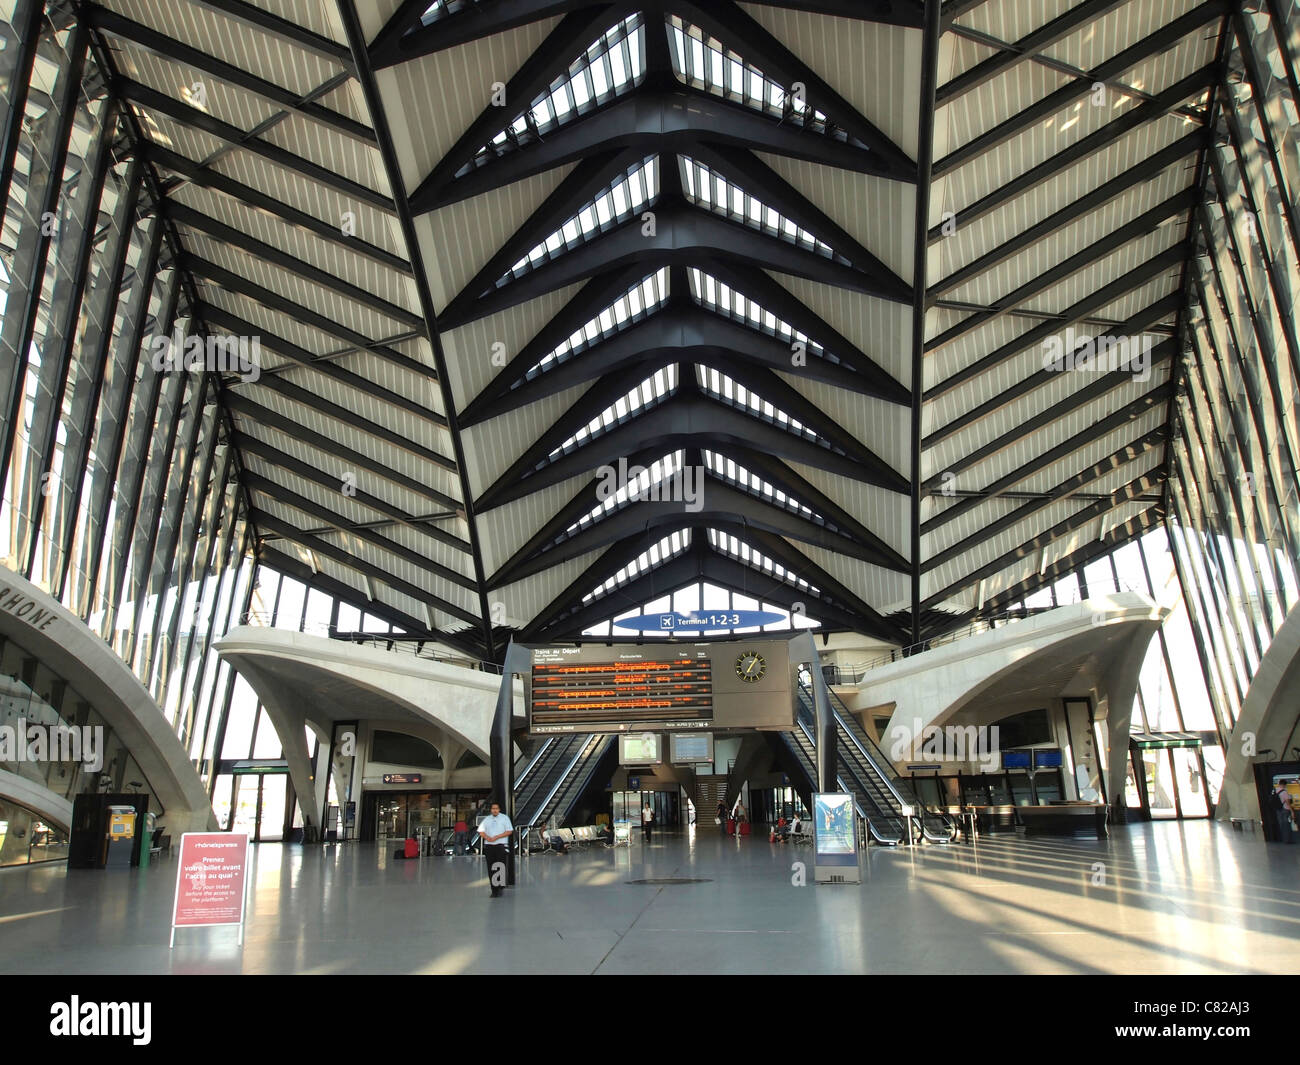 Gare TGV Satolas, Satolas Bahnhof mit Durchgang zum Flughafen St. Excupery, Lyon, Frankreich Stockfoto